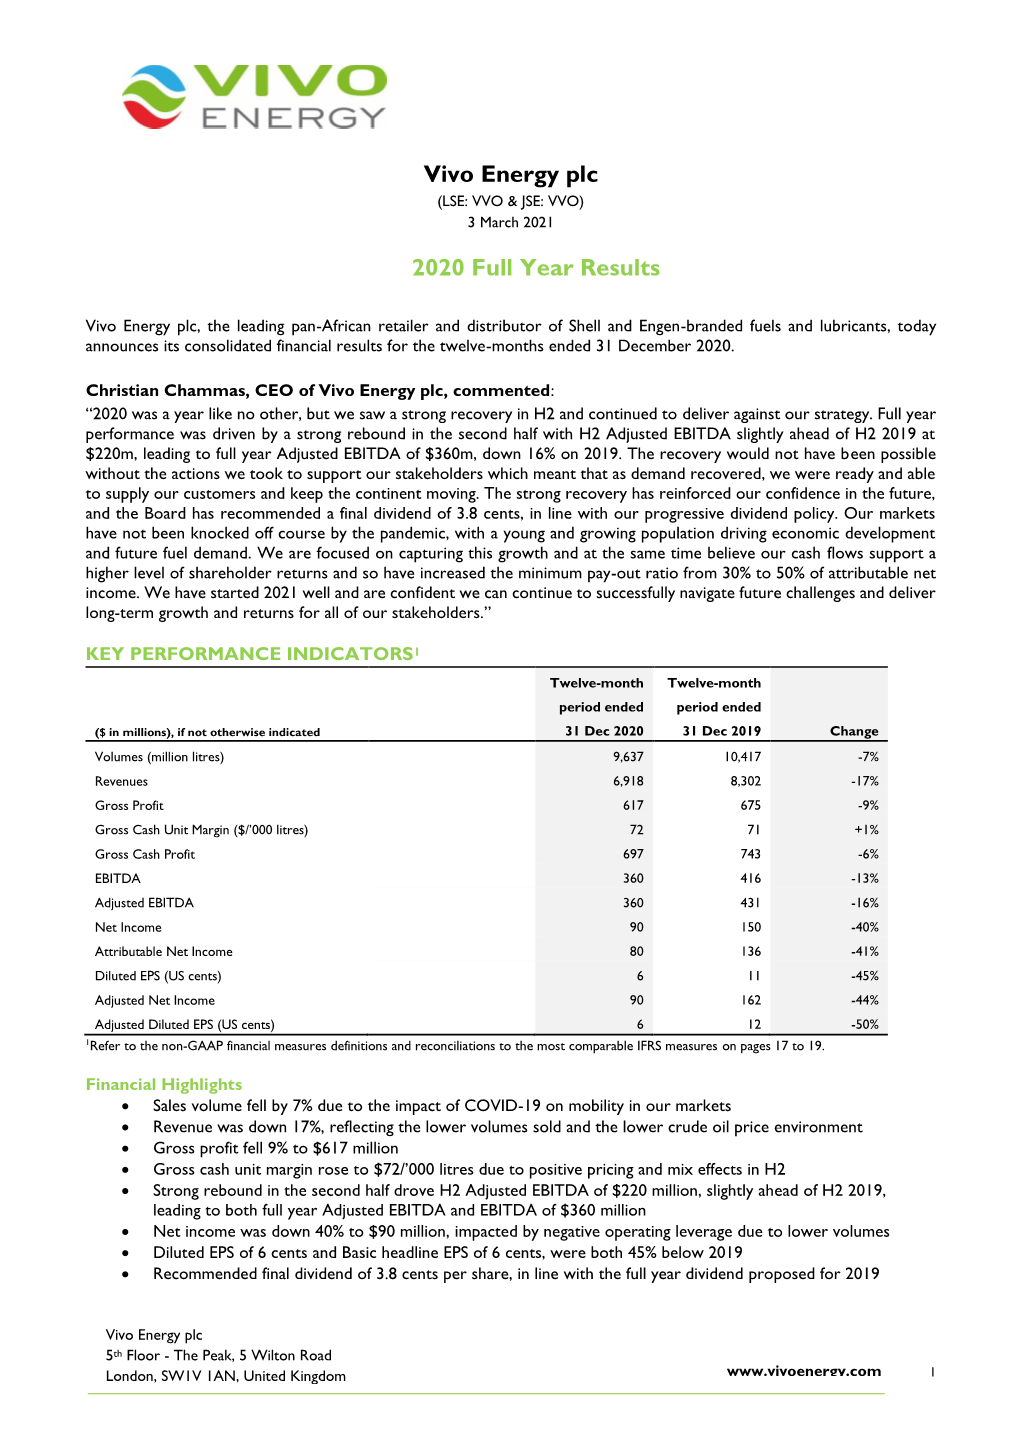 Vivo Energy Plc 2020 Full Year Results